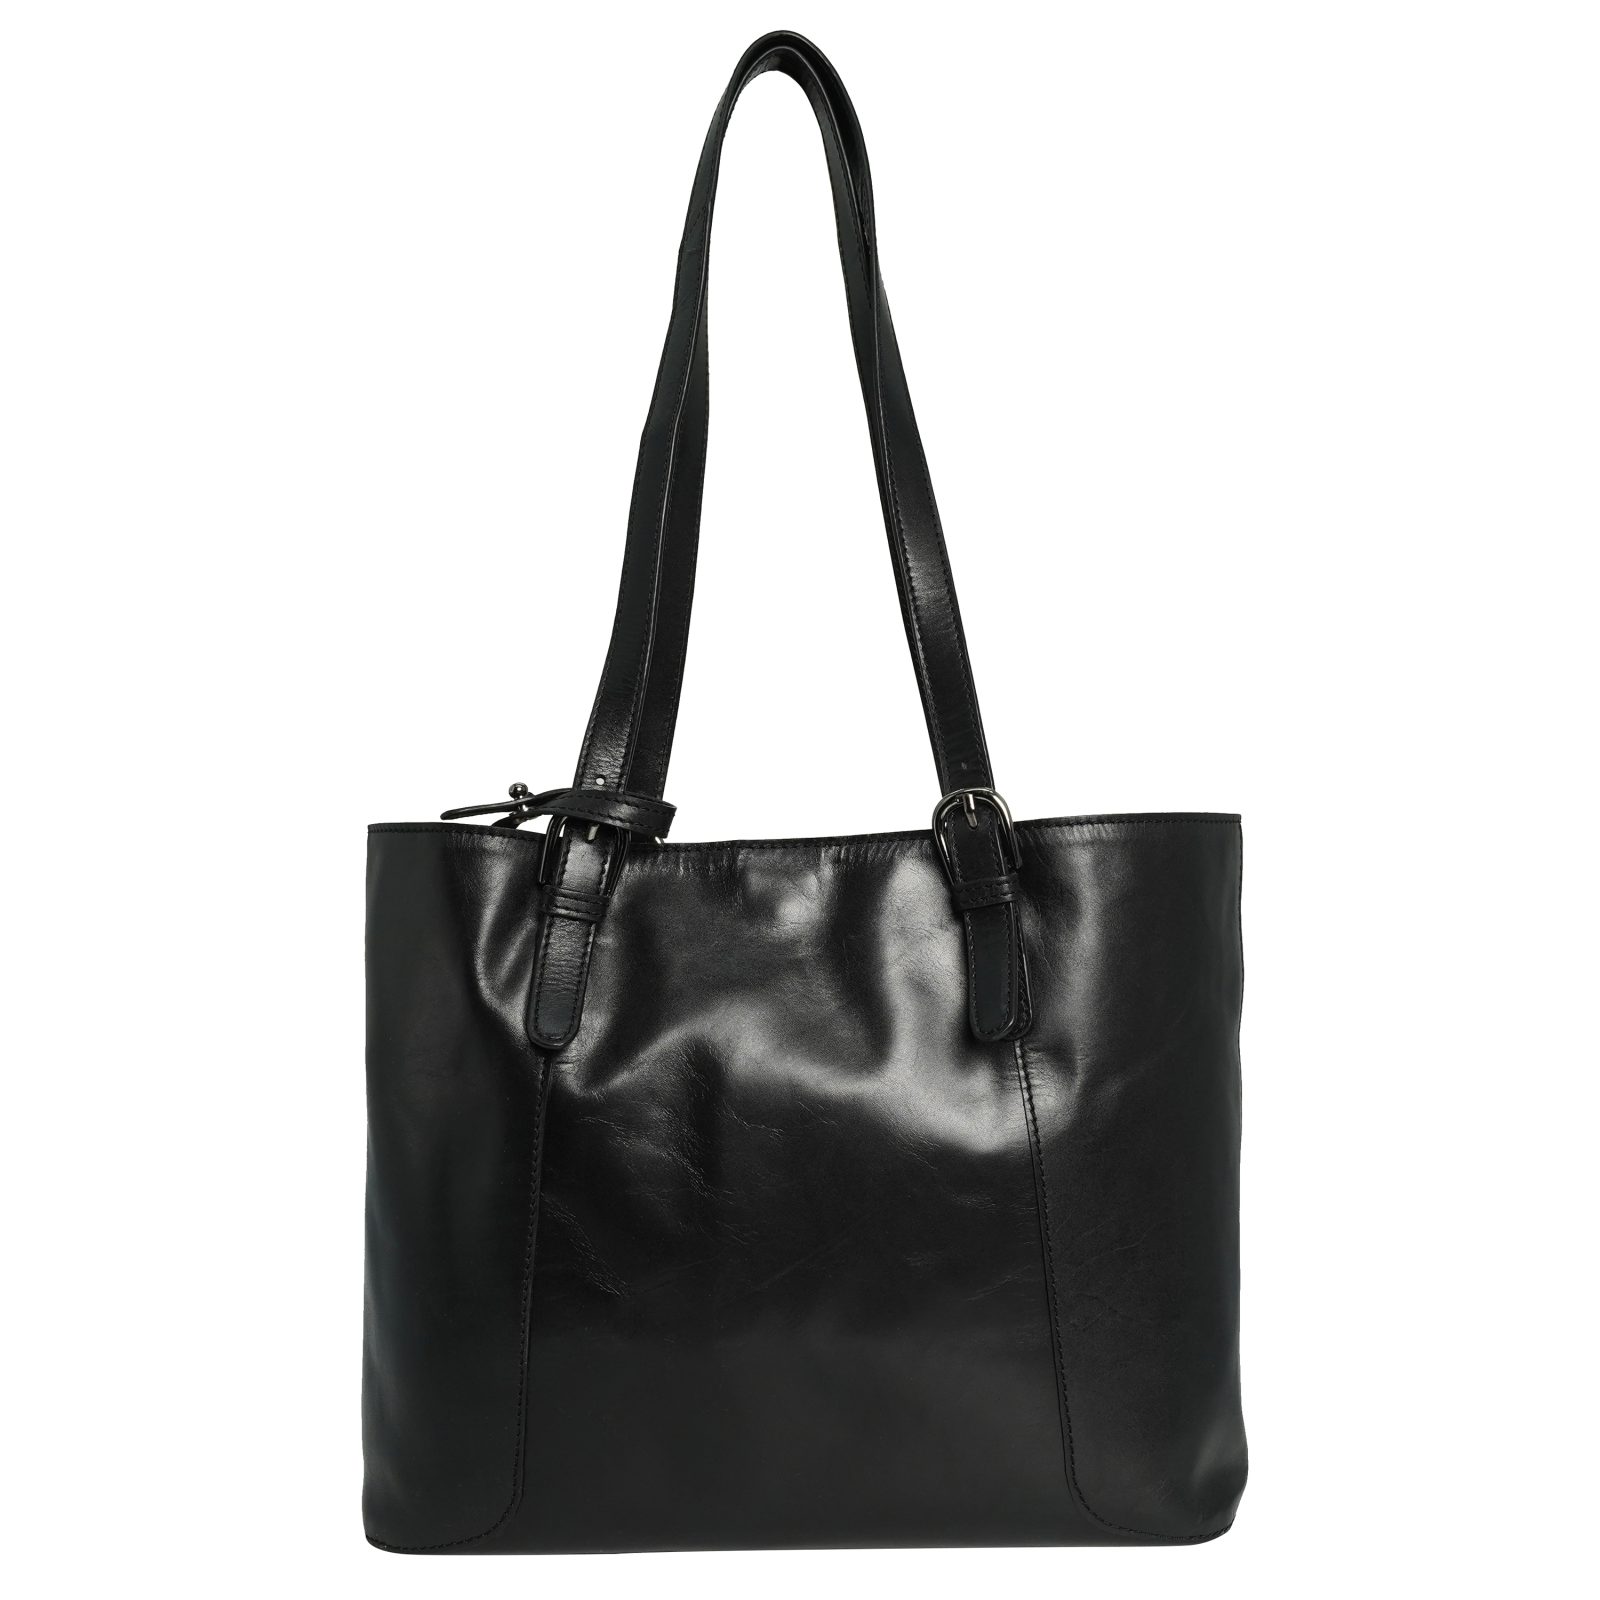 Genuine Leather Women Black Tote Bag - Leatherman Fashion Private Limited